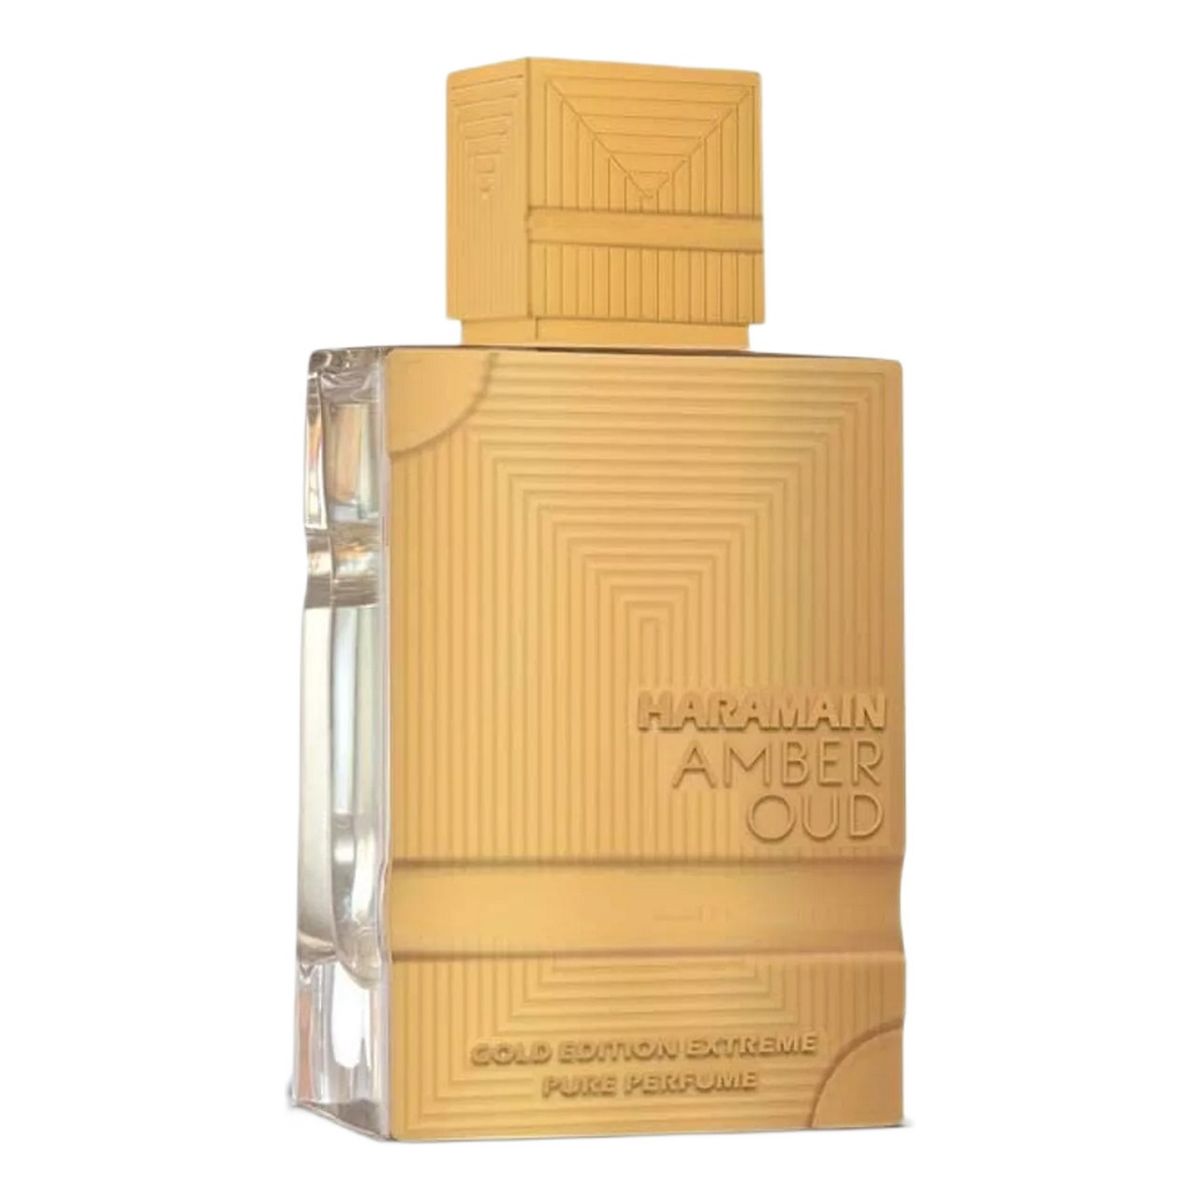 Al Haramain Amber Oud Gold Edition Extreme Woda perfumowana spray tester 60ml